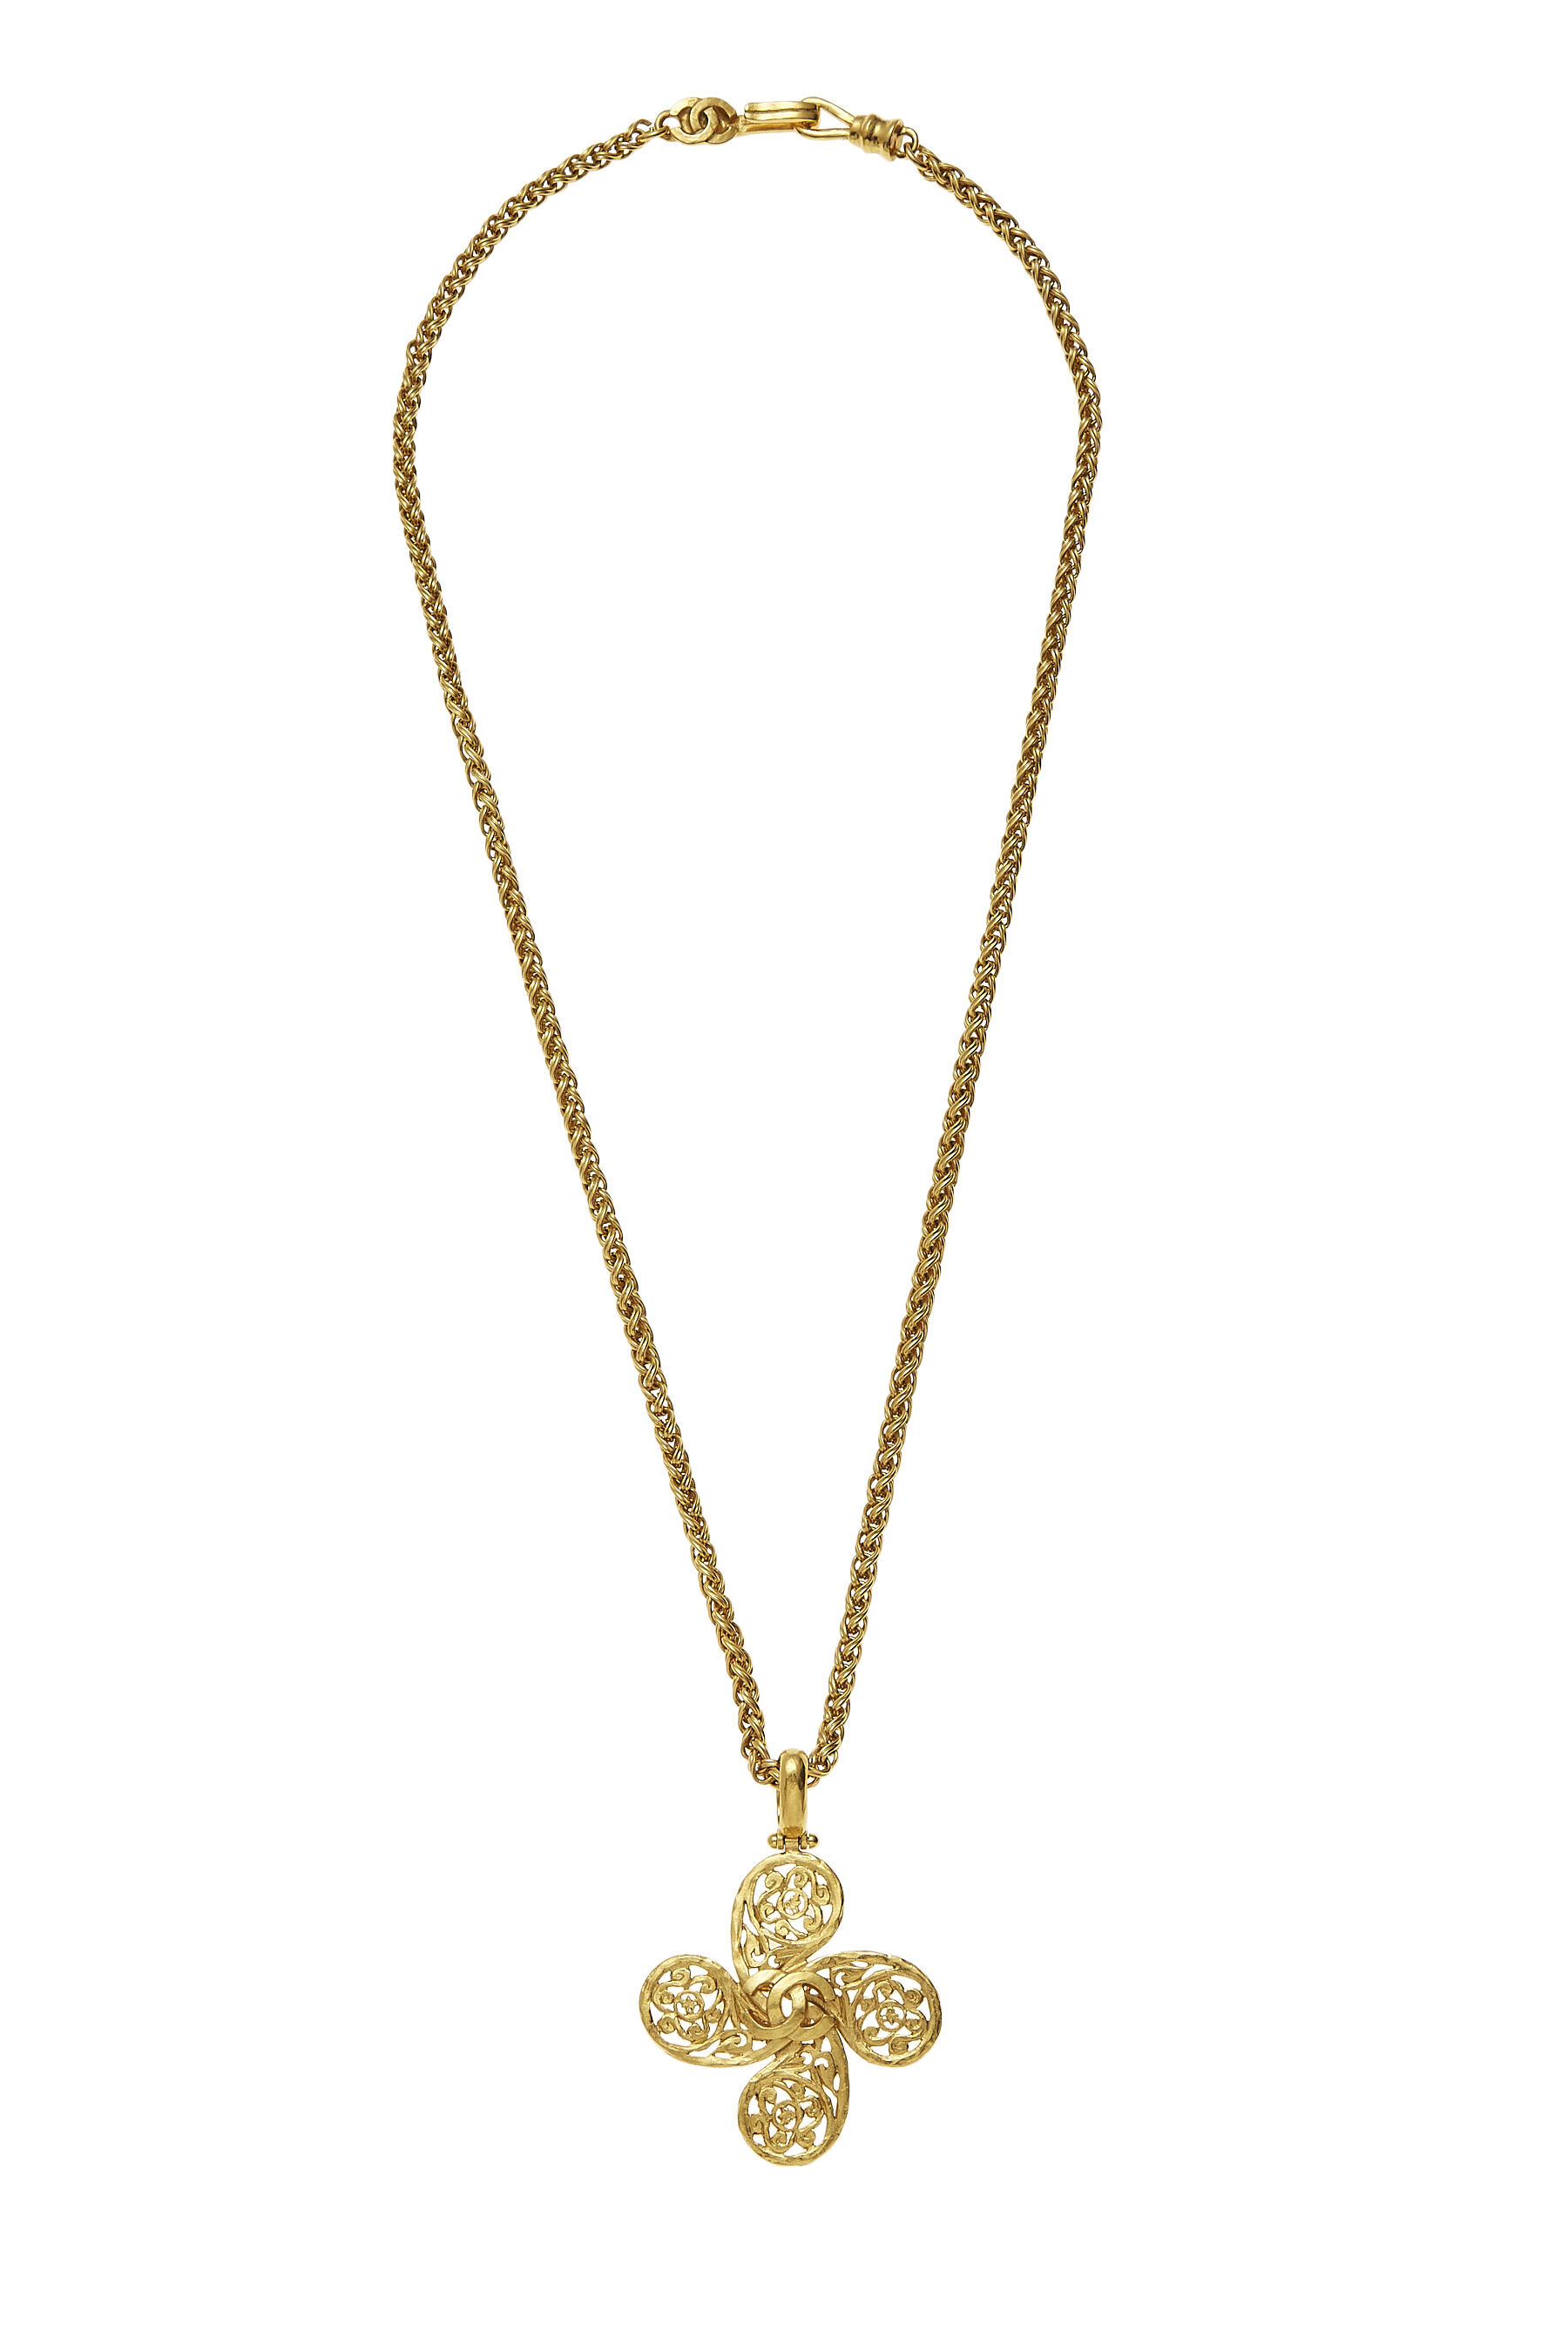 Chanel Clover Gold Chain Pendant Necklace 03P 140304 | eBay